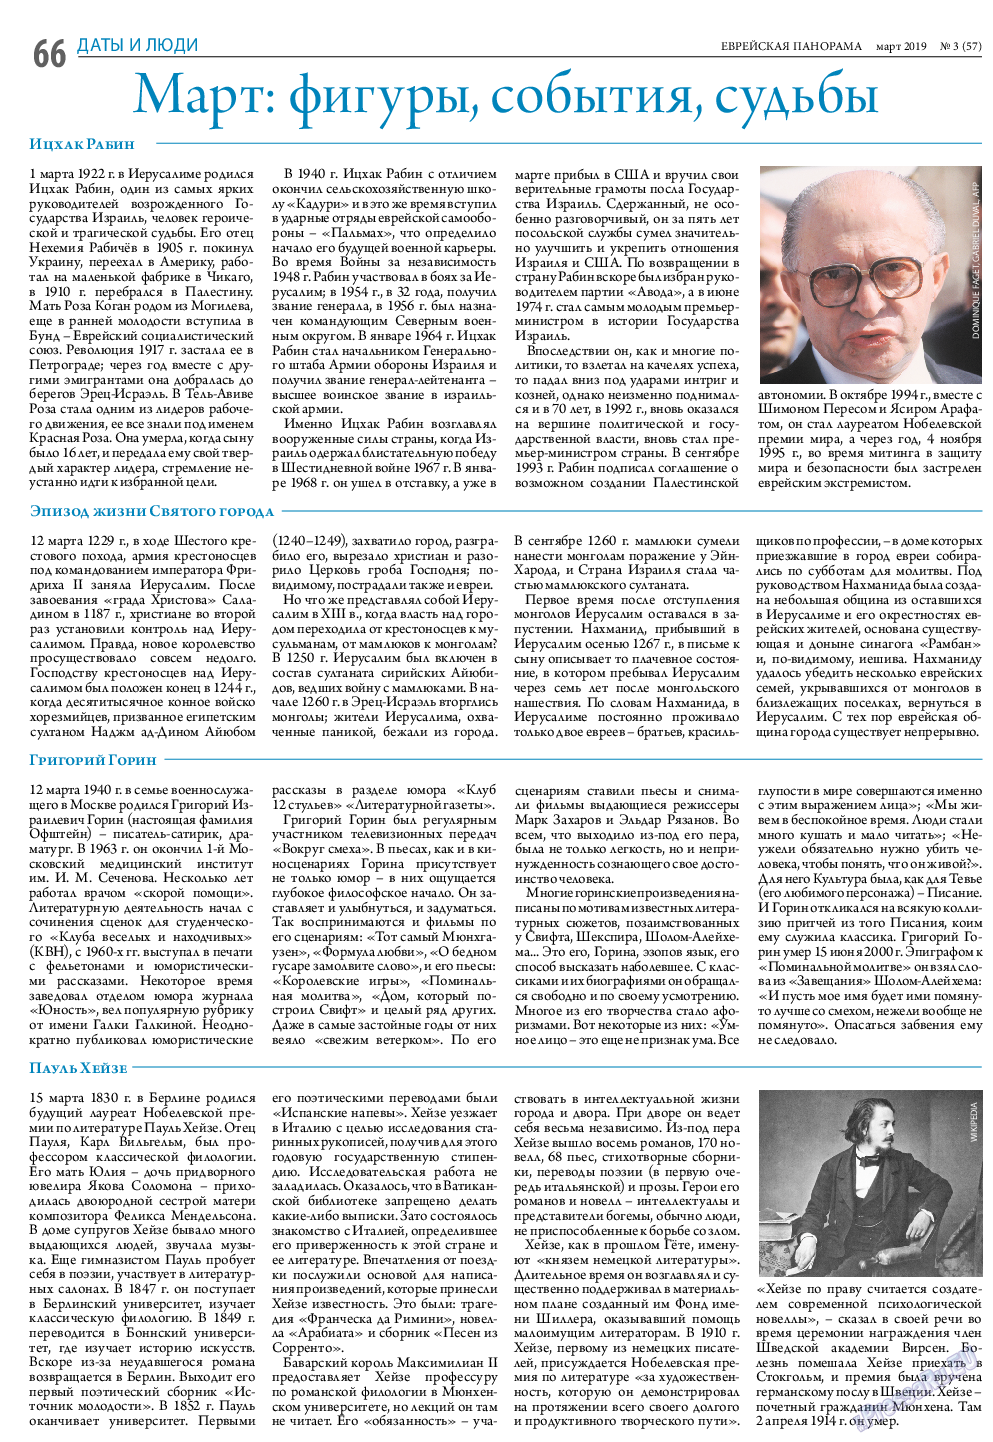 Еврейская панорама, газета. 2019 №3 стр.66